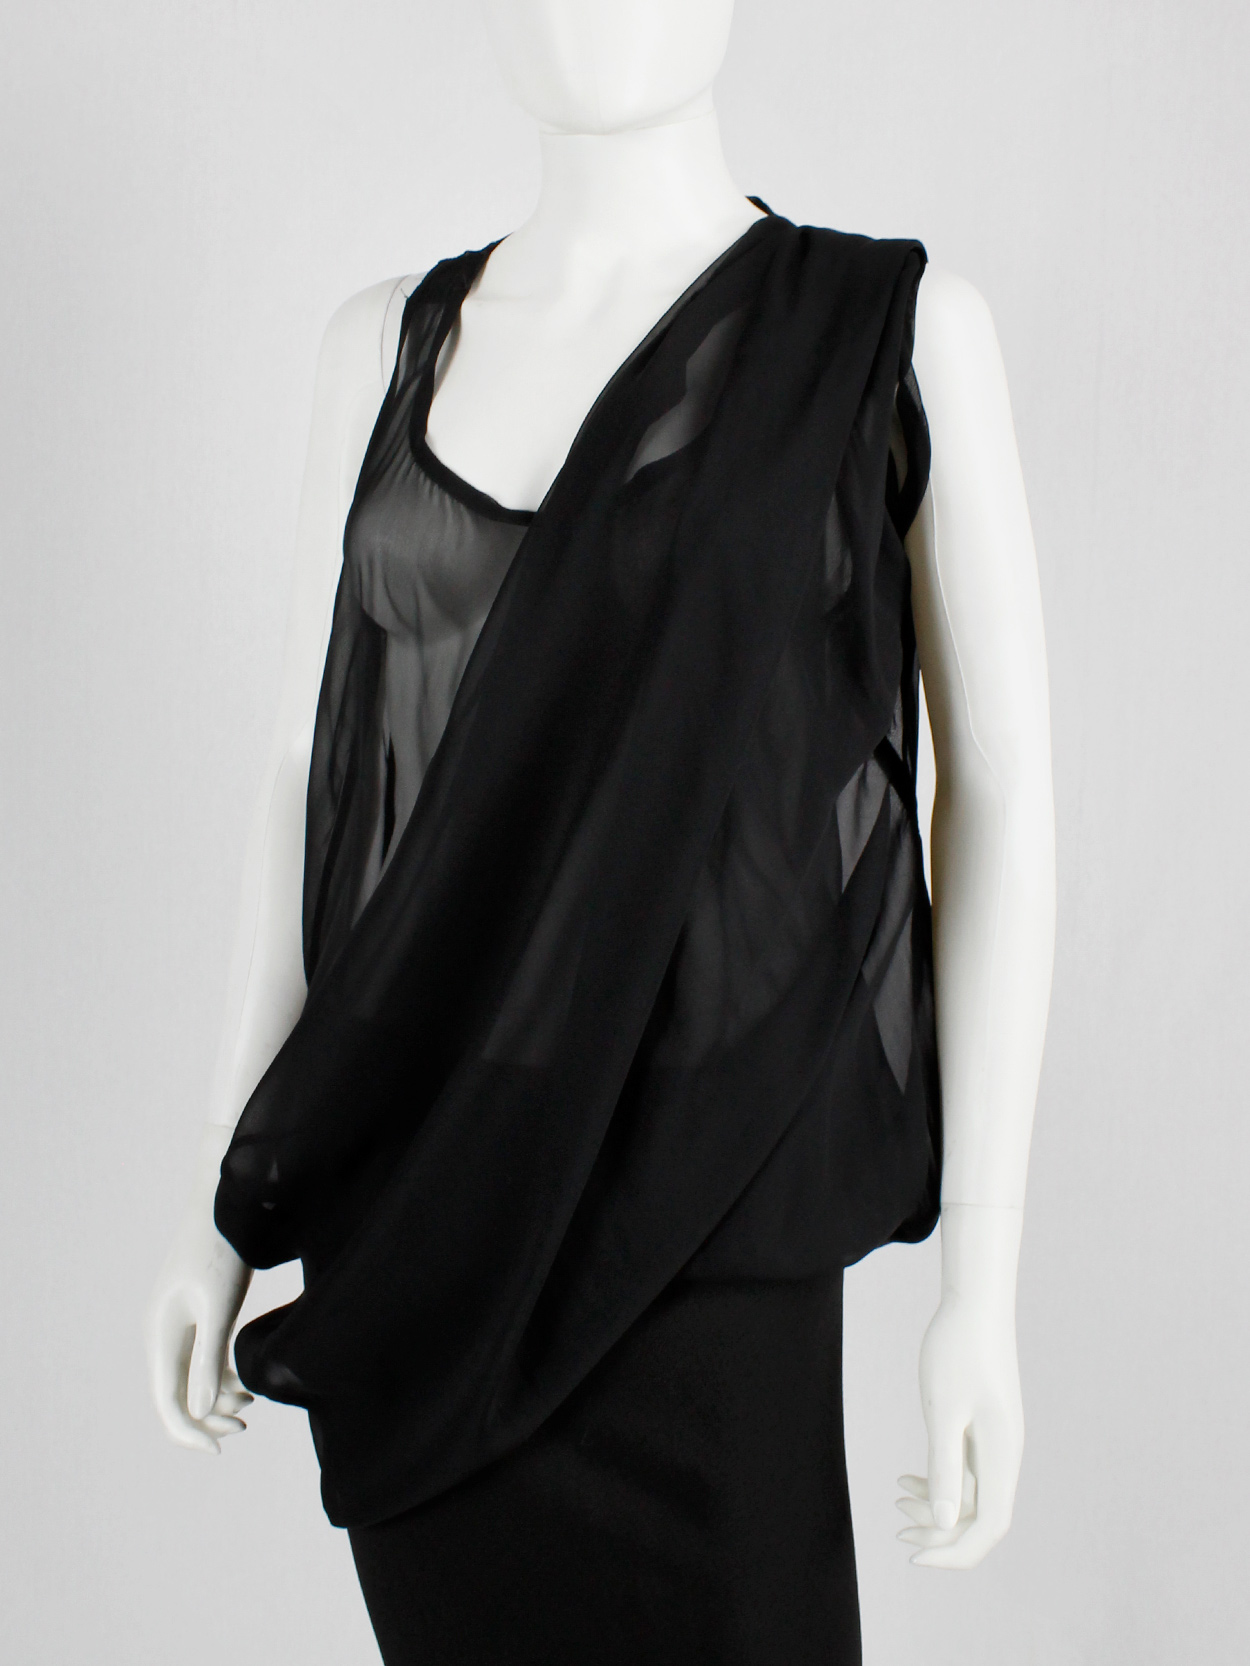 Ann Demeulemeester black sheer draped top or maxi dress - V A N II T A S